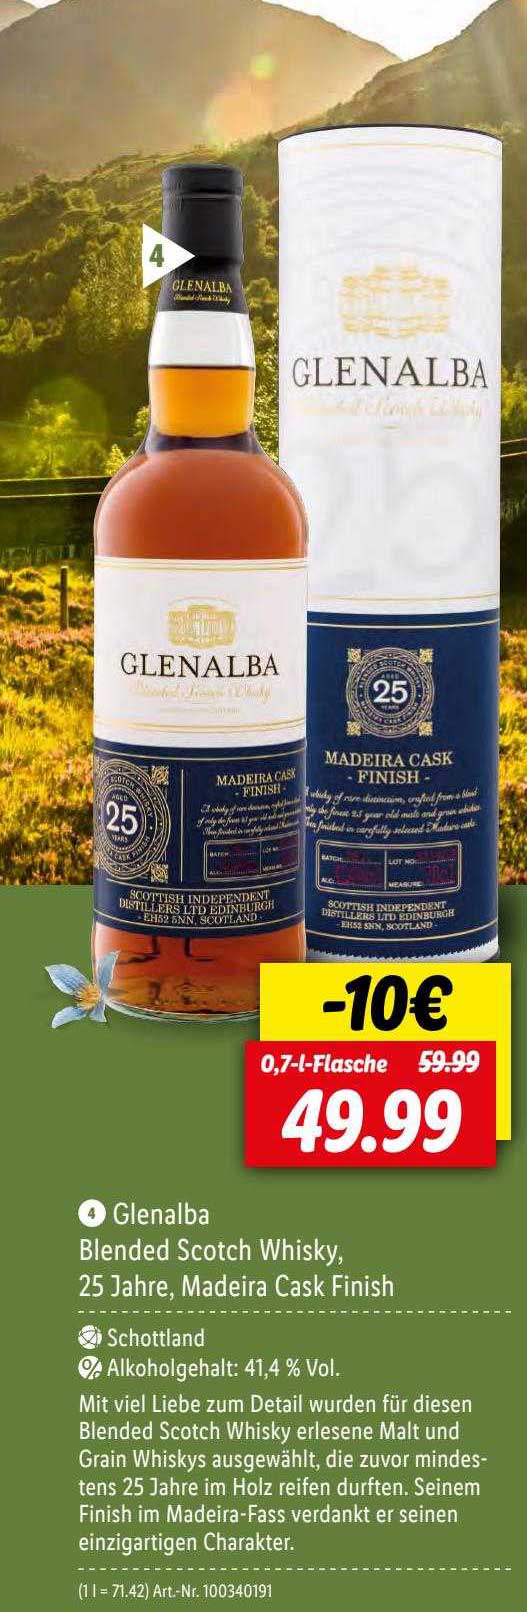 Glenalba Blended Scotch Whisky 25 Jahre Madeira Cask Finish Angebot bei  Lidl